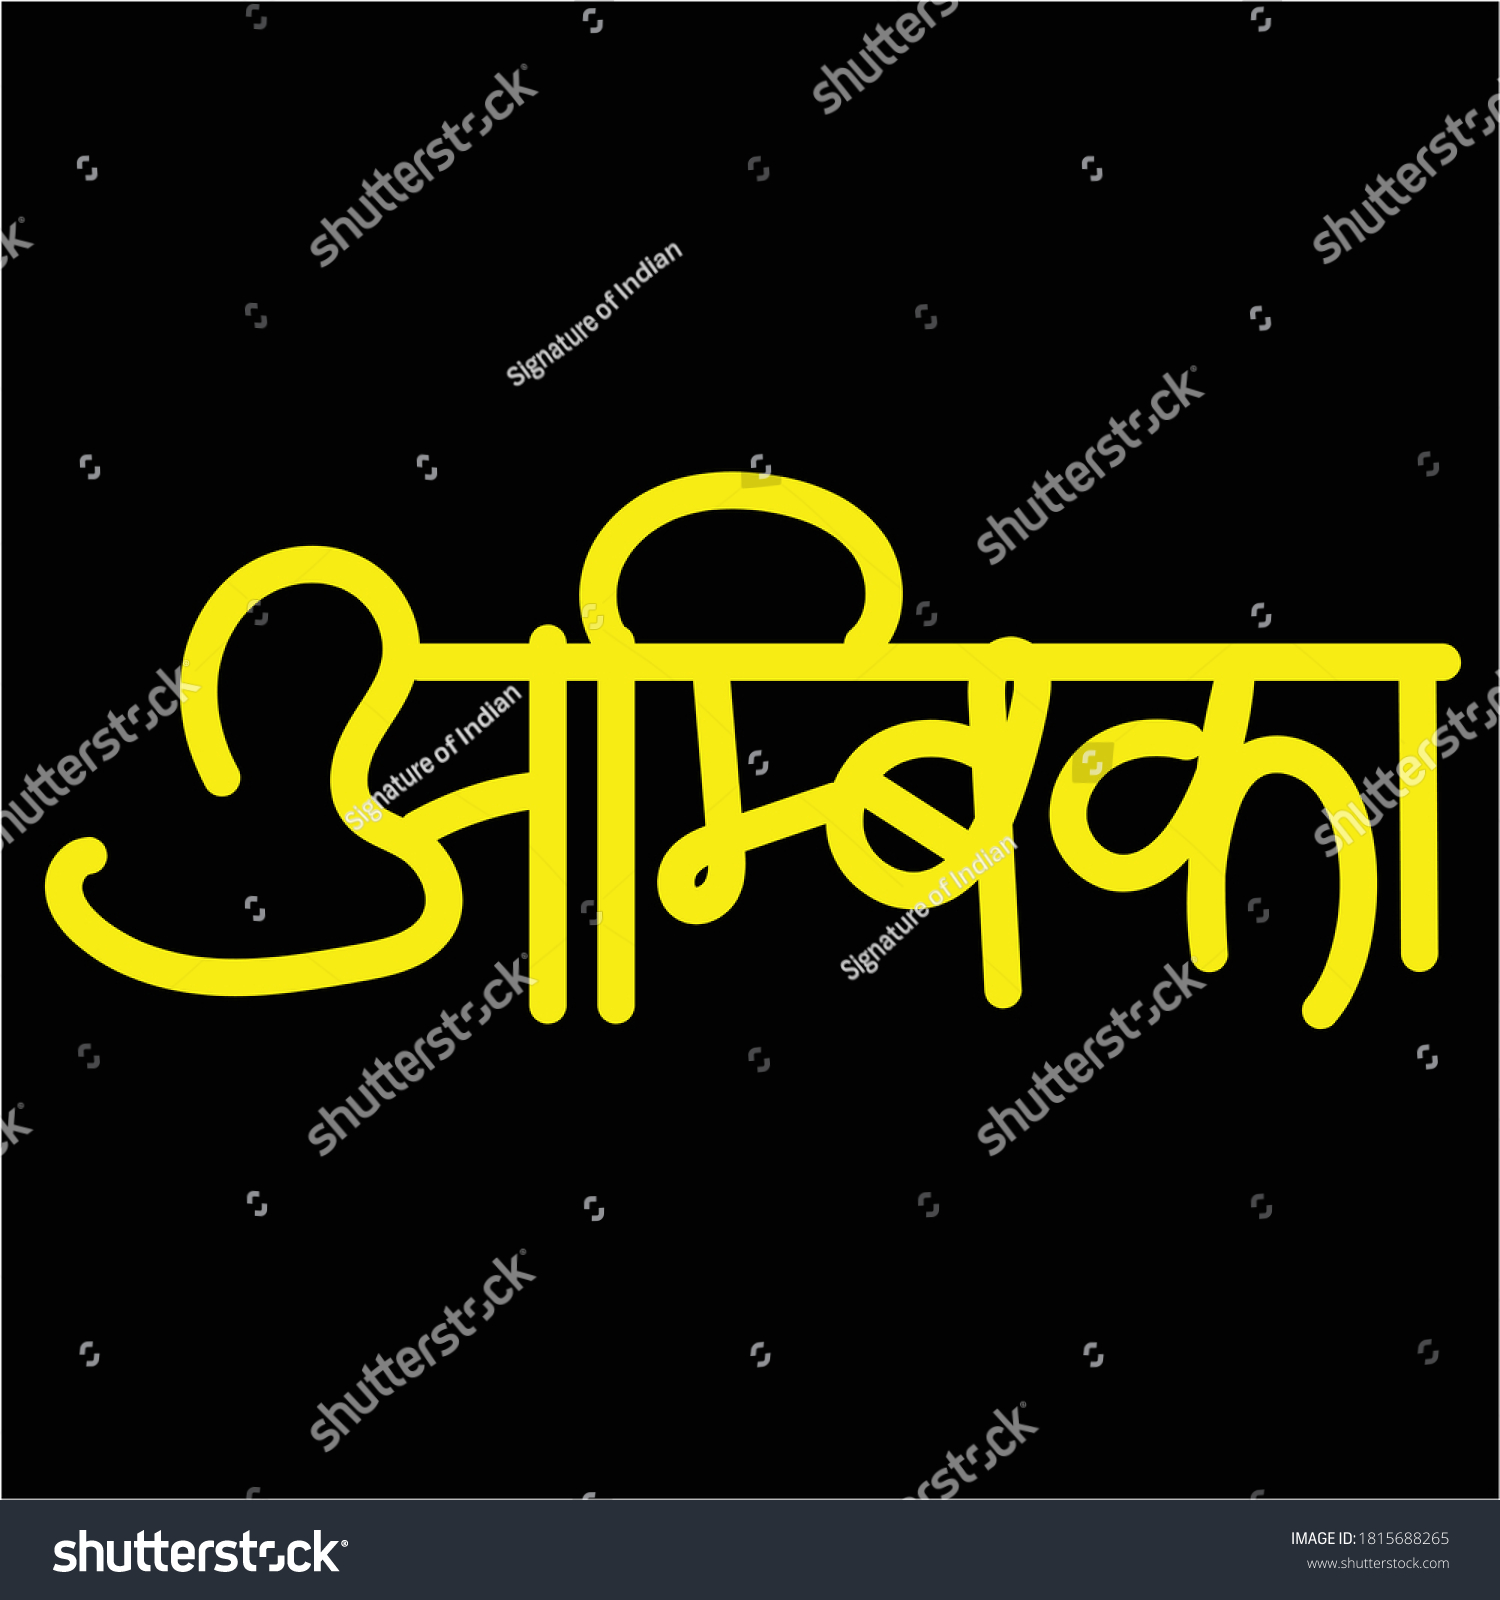 SVG of English Goddess Durga Name Hindi Text Ambika for Indian Festival of Nine Nights Durga Puja Celebration. svg